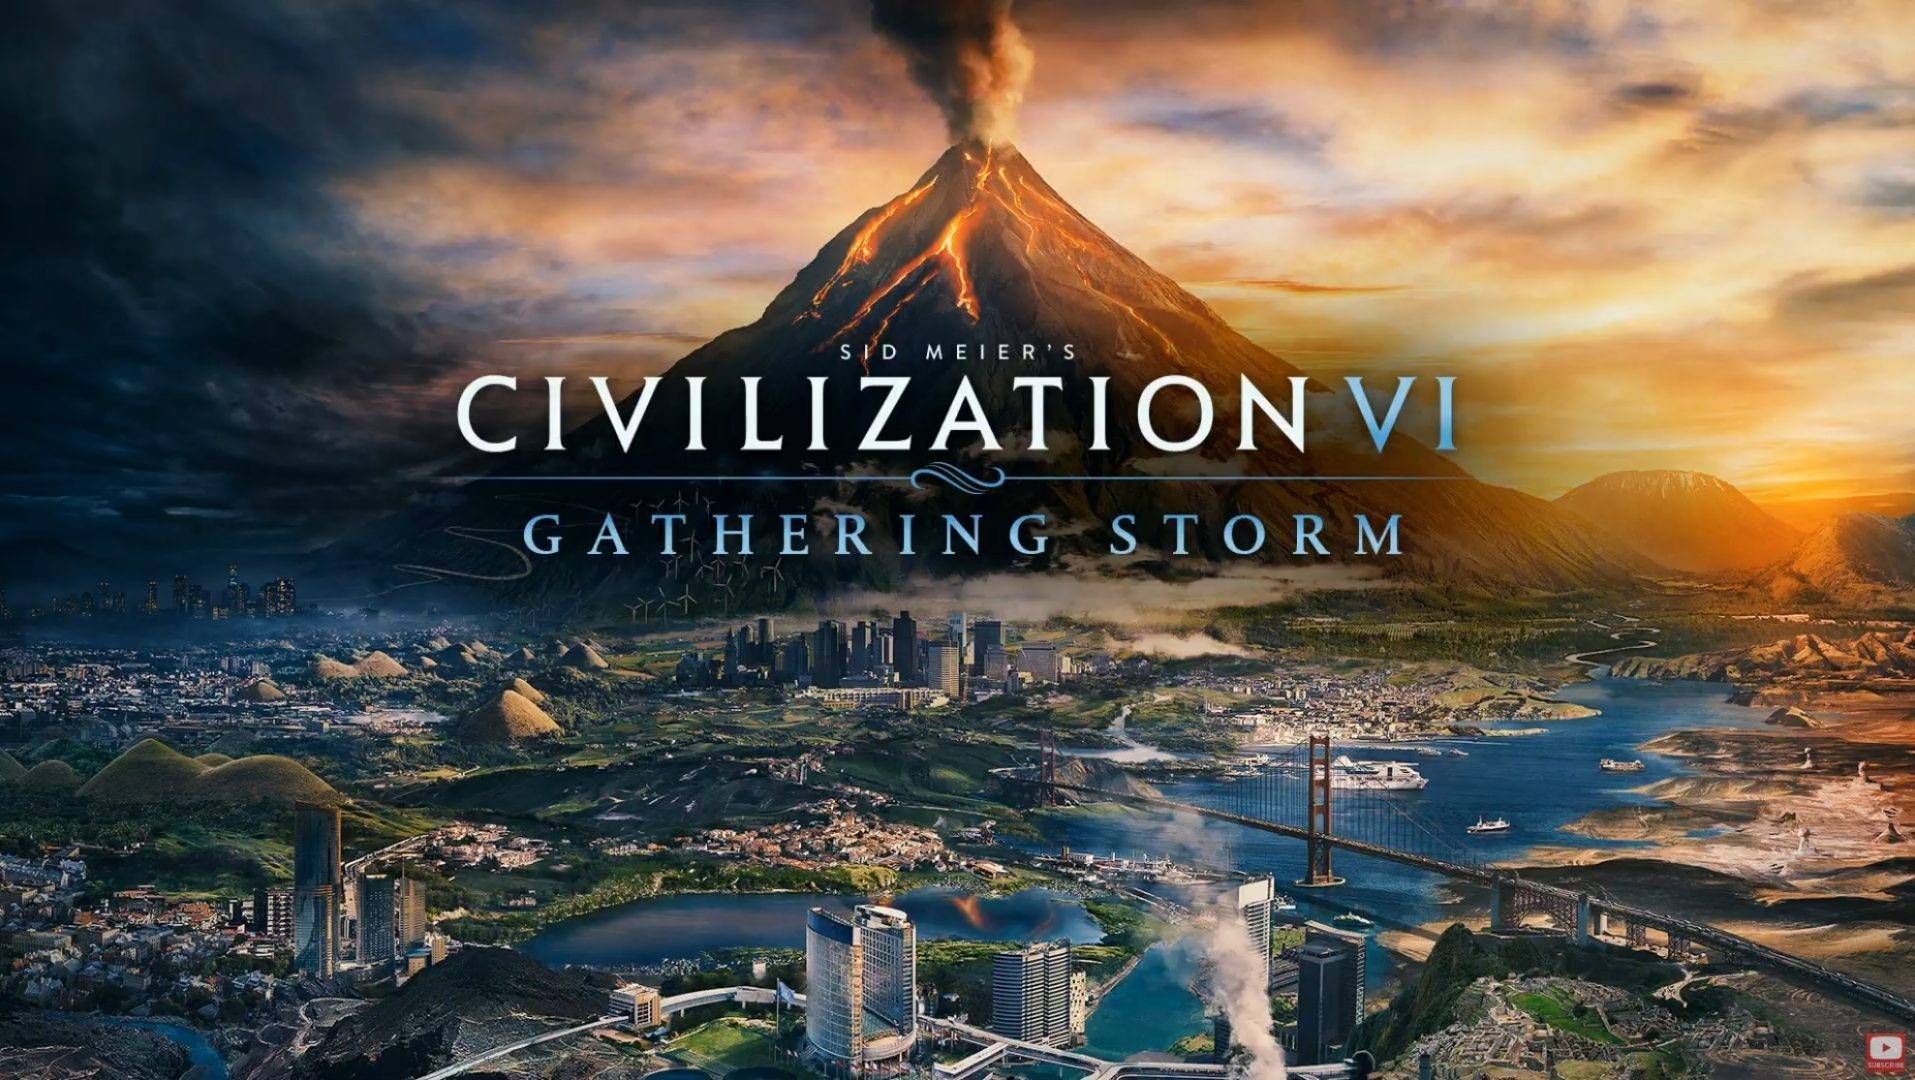 https://s3.ifanr.com/wp-content/uploads/2020/02/Civilization-VI-Gathering-Storm.jpg